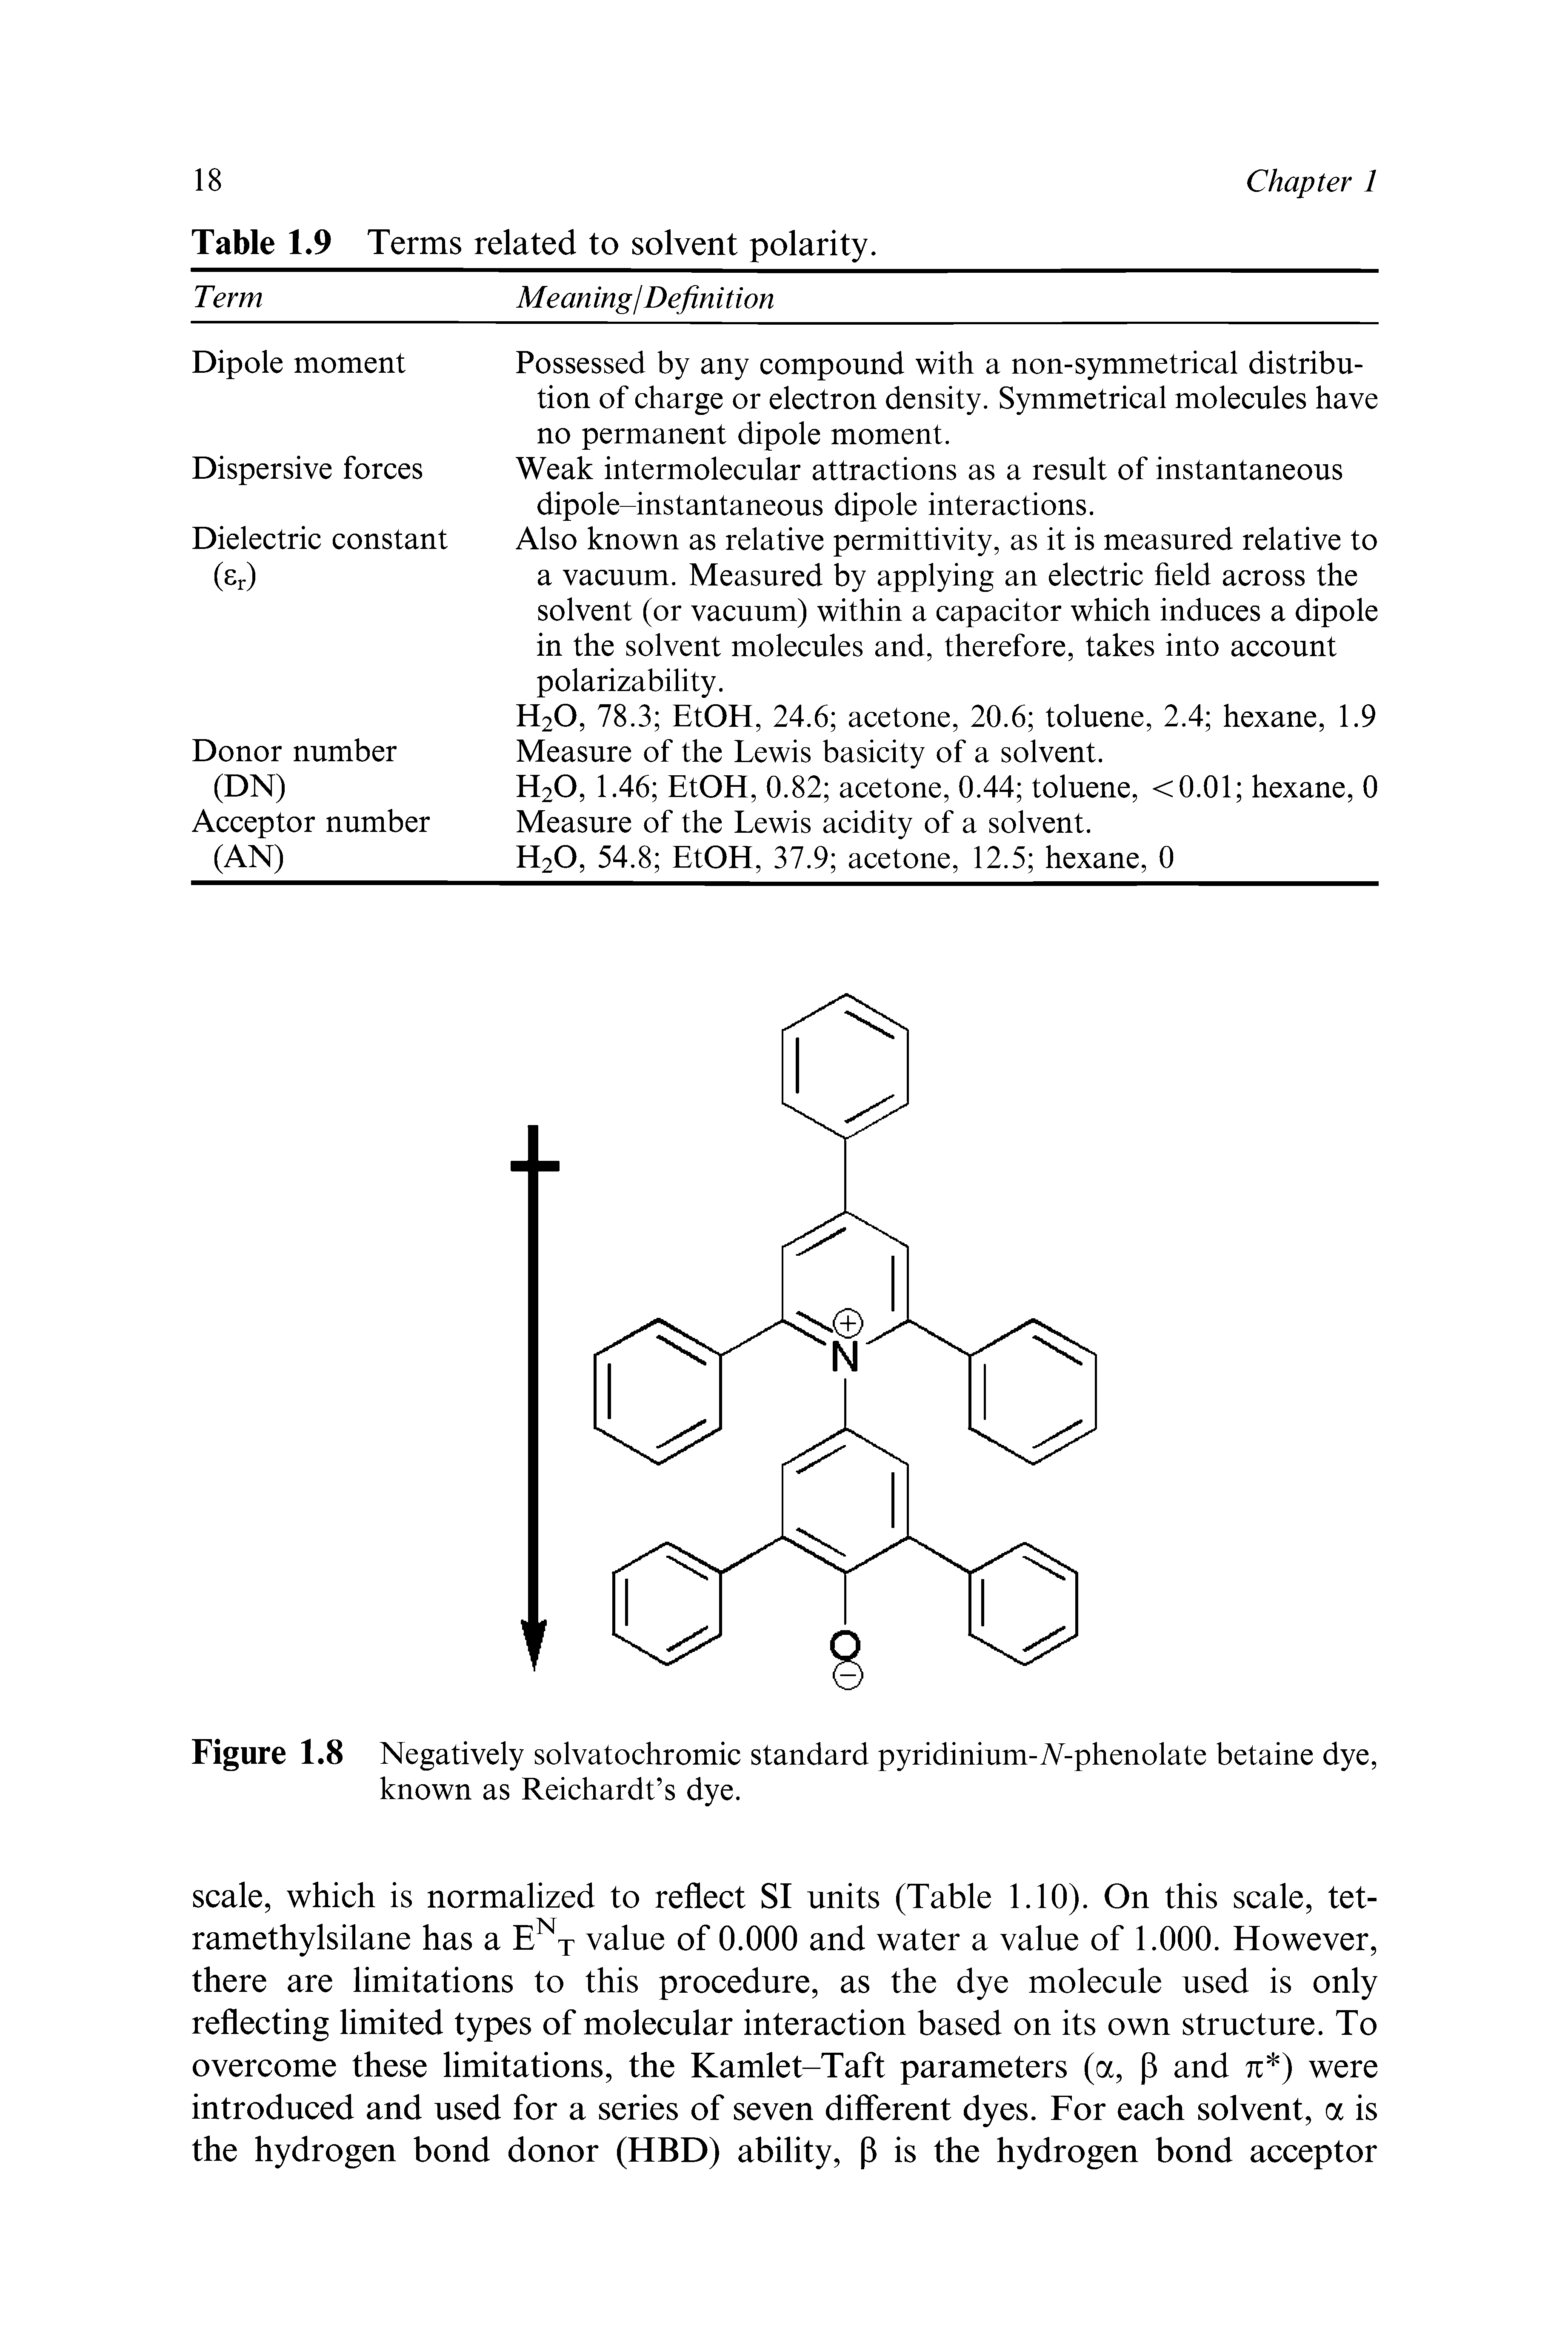 Figure 1.8 Negatively solvatochromic standard pyridinium-A-phenolate betaine dye, known as Reichardt s dye.